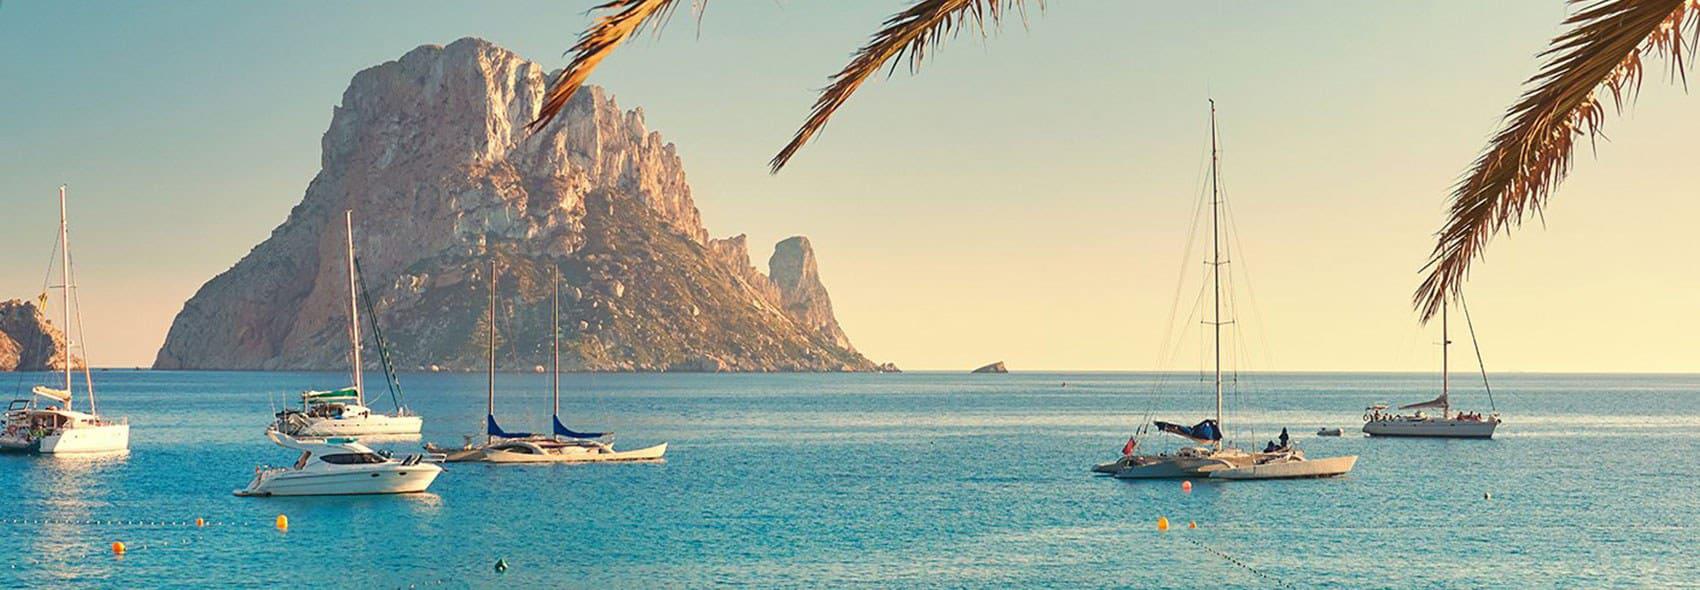 Ibiza Spain wellness travel inspiration LYMA